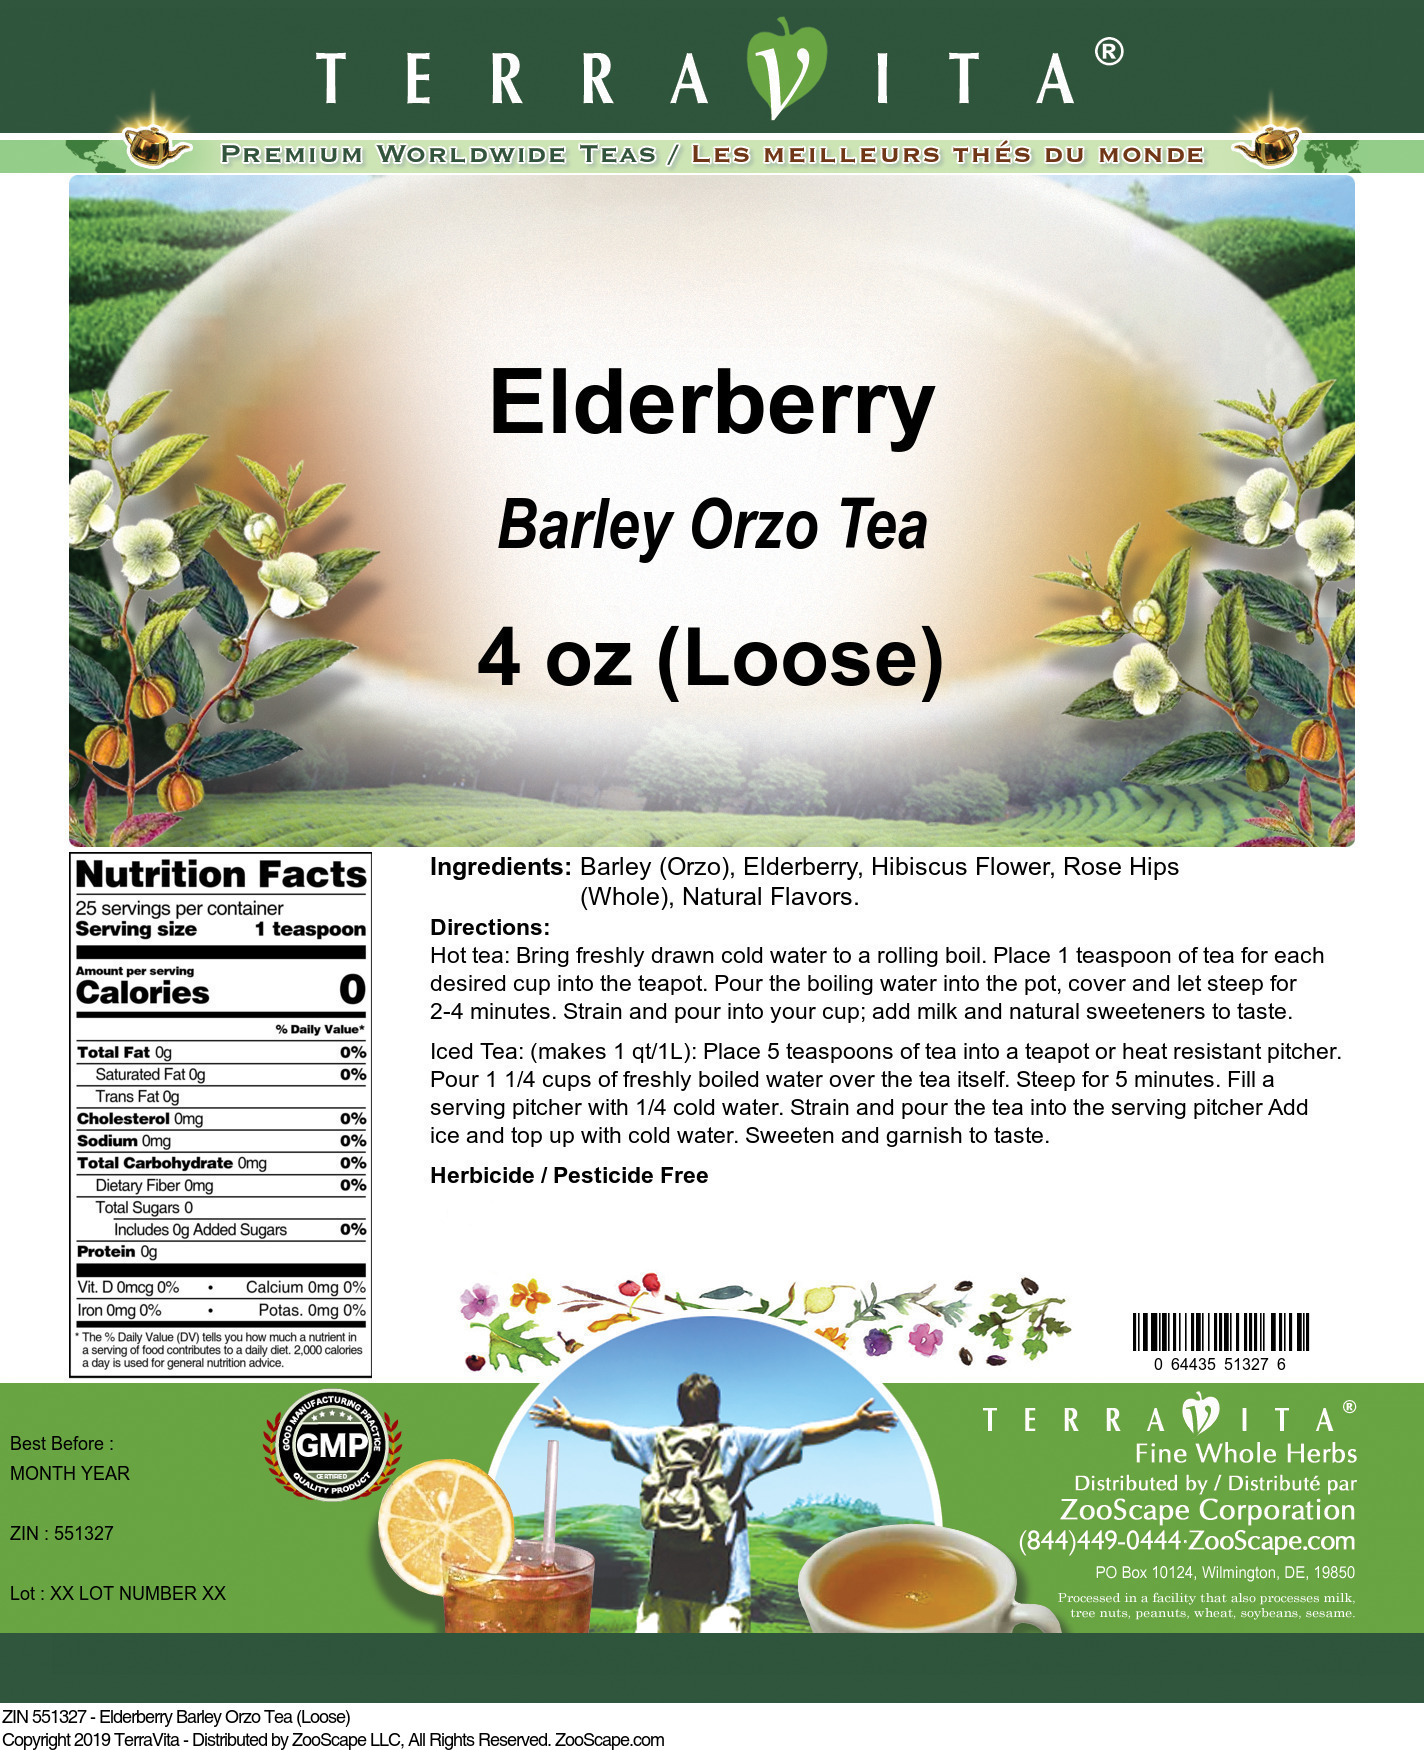 Elderberry Barley Orzo Tea (Loose) - Label